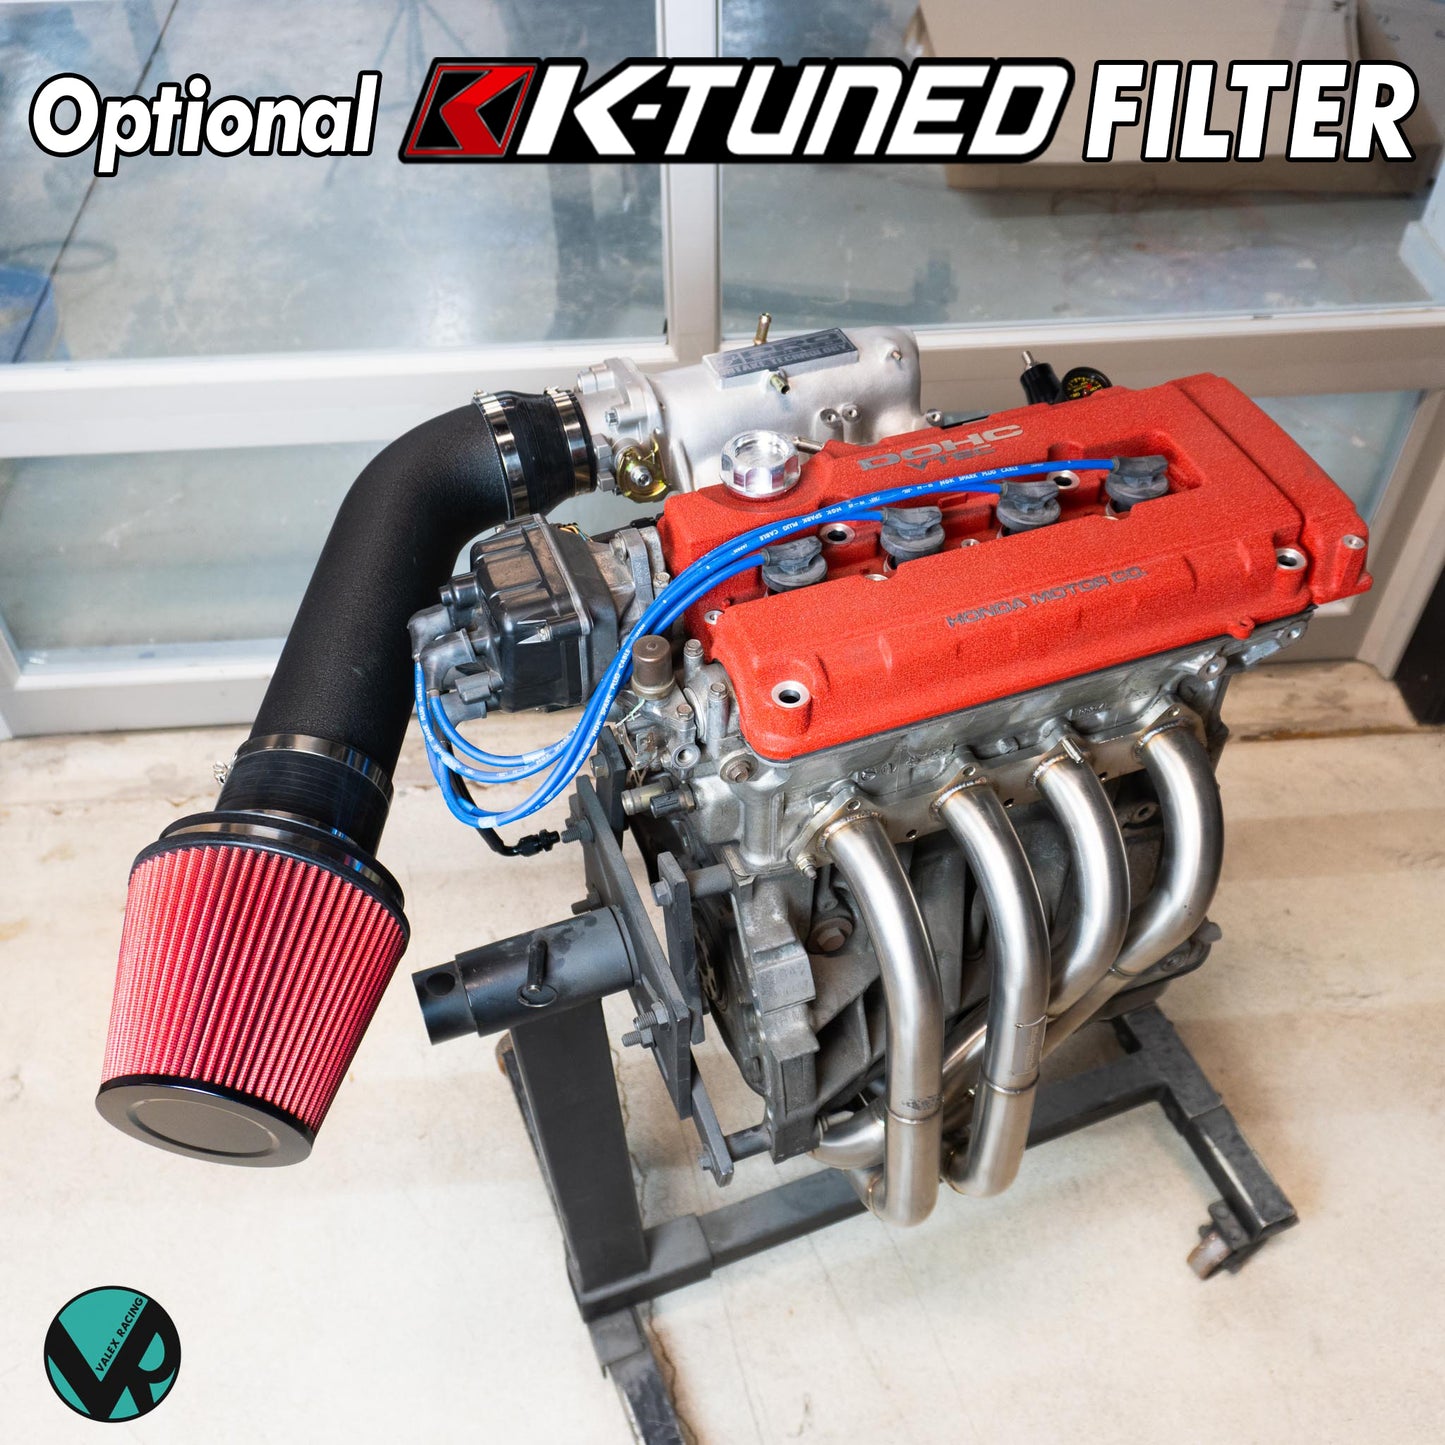 4" Inch Race Air Intake & Filter OPTIONAL K-Tuned Filter fits Honda Civic & Integra All B, D, H, Series